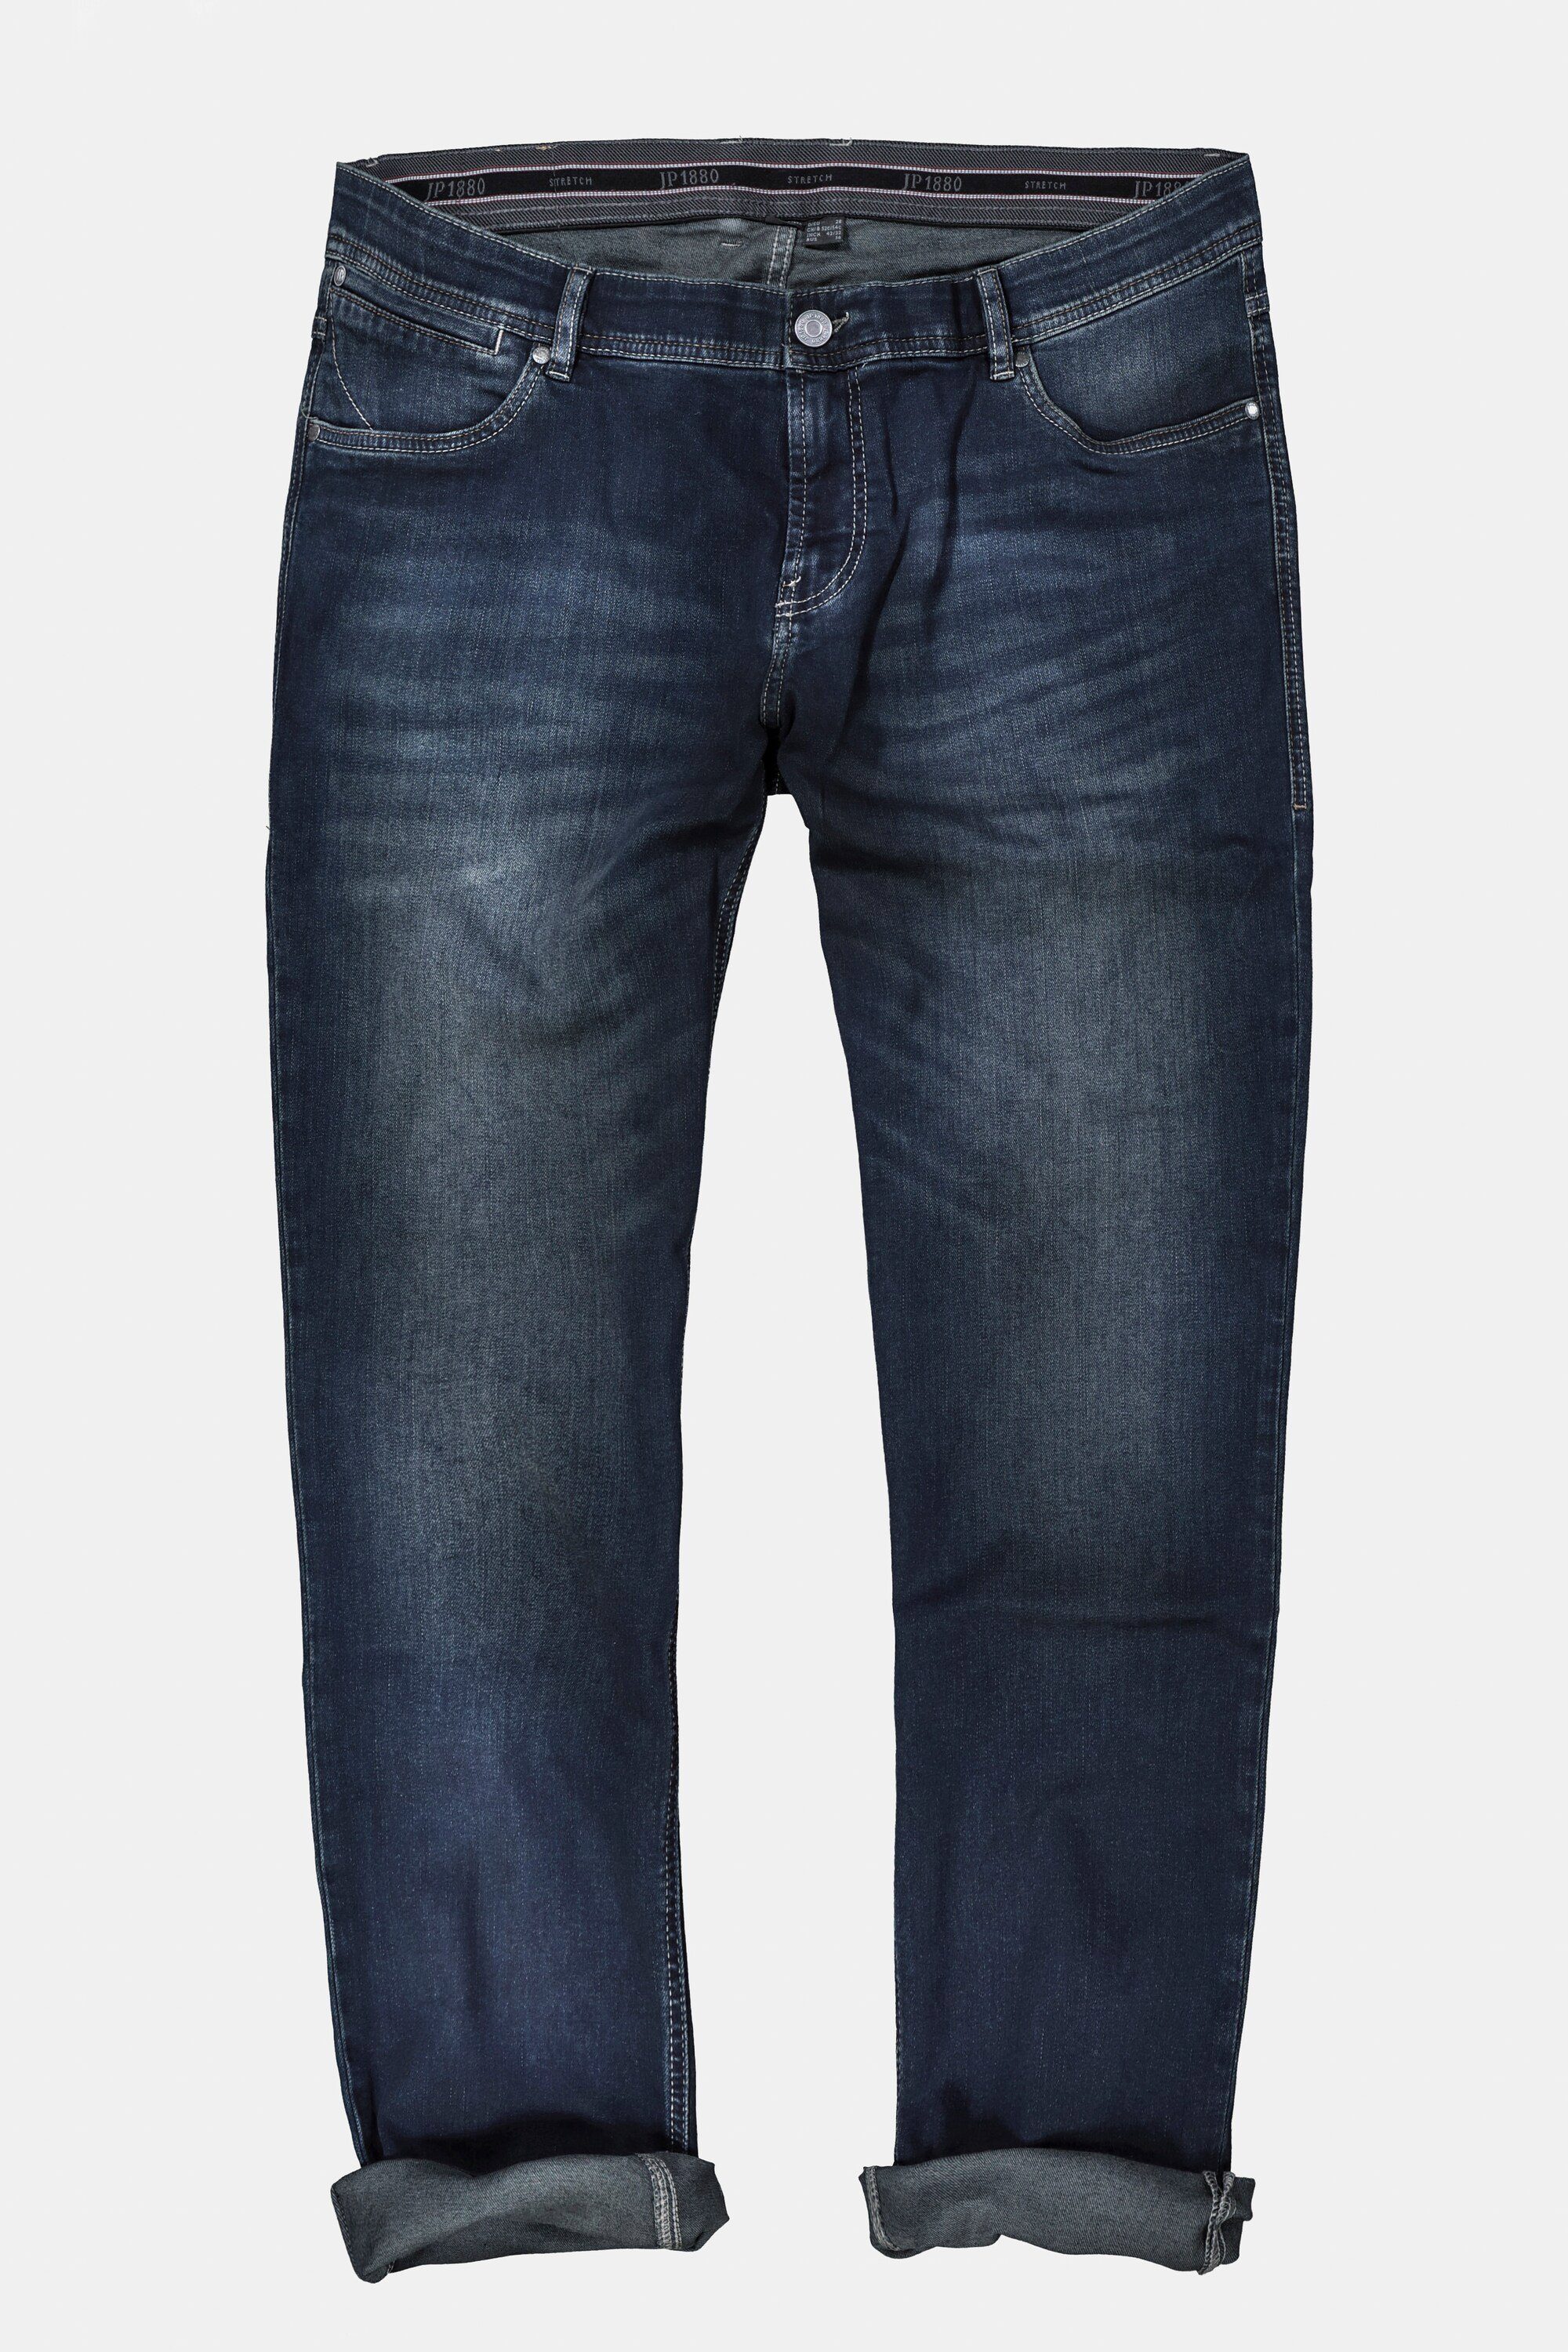 JP1880 Cargohose bis Jeans denim Bauchfit Denim Gr. 70/35 blue